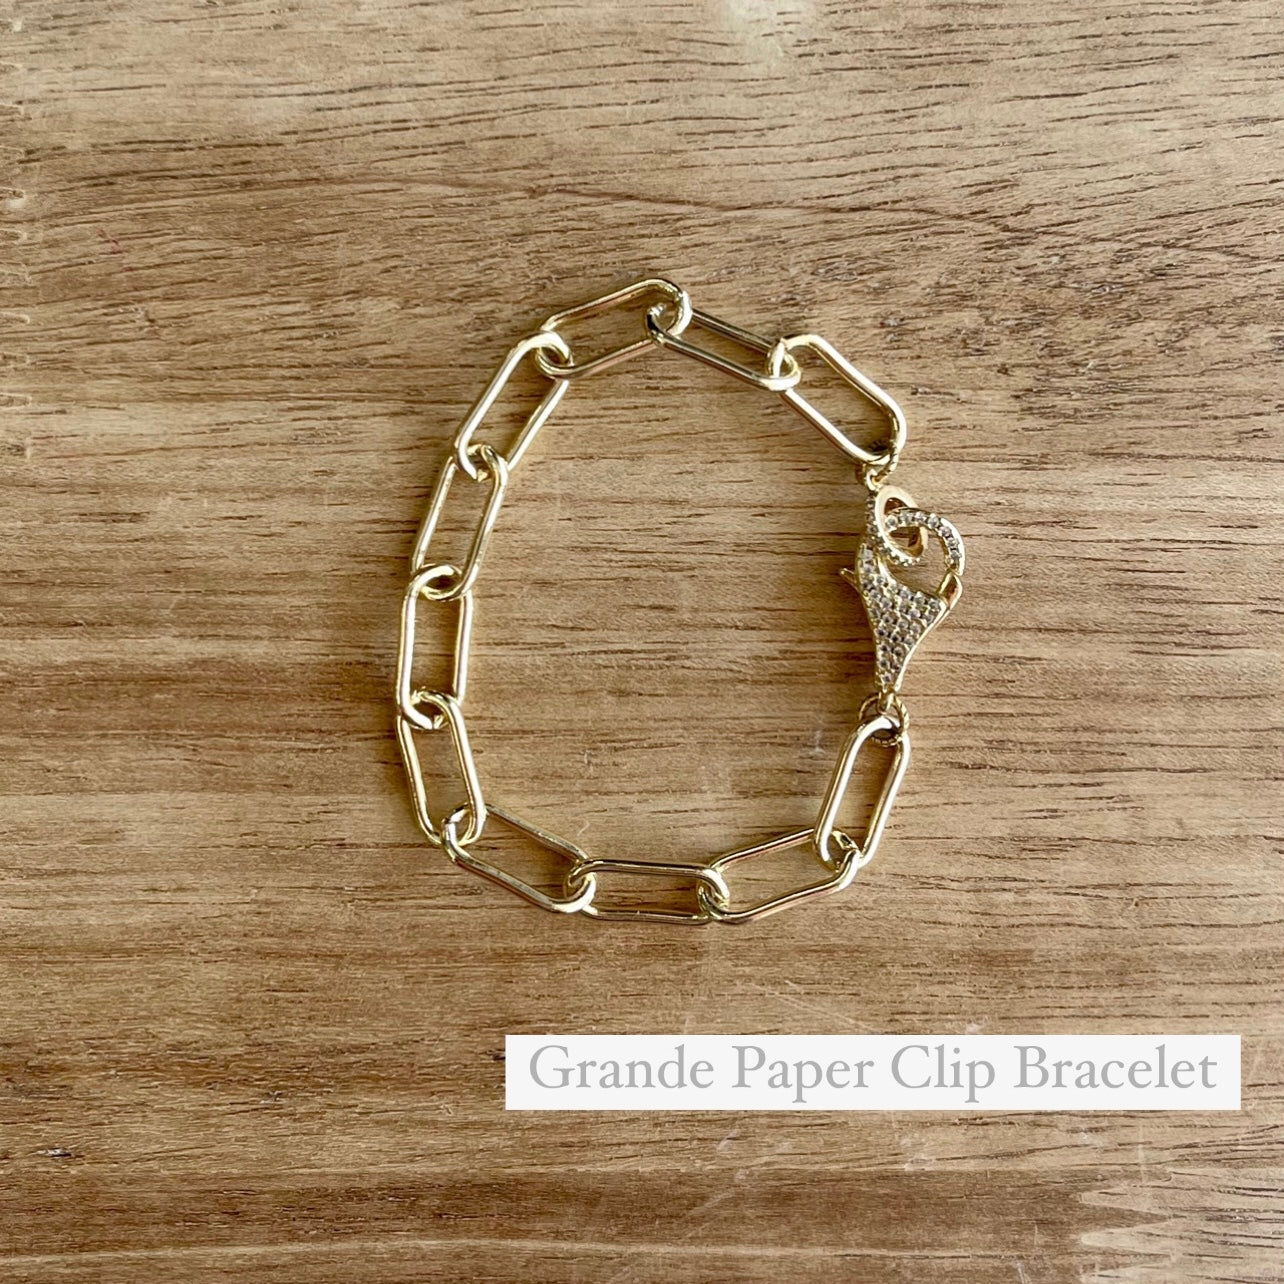 Grande Paper Clip Bracelet